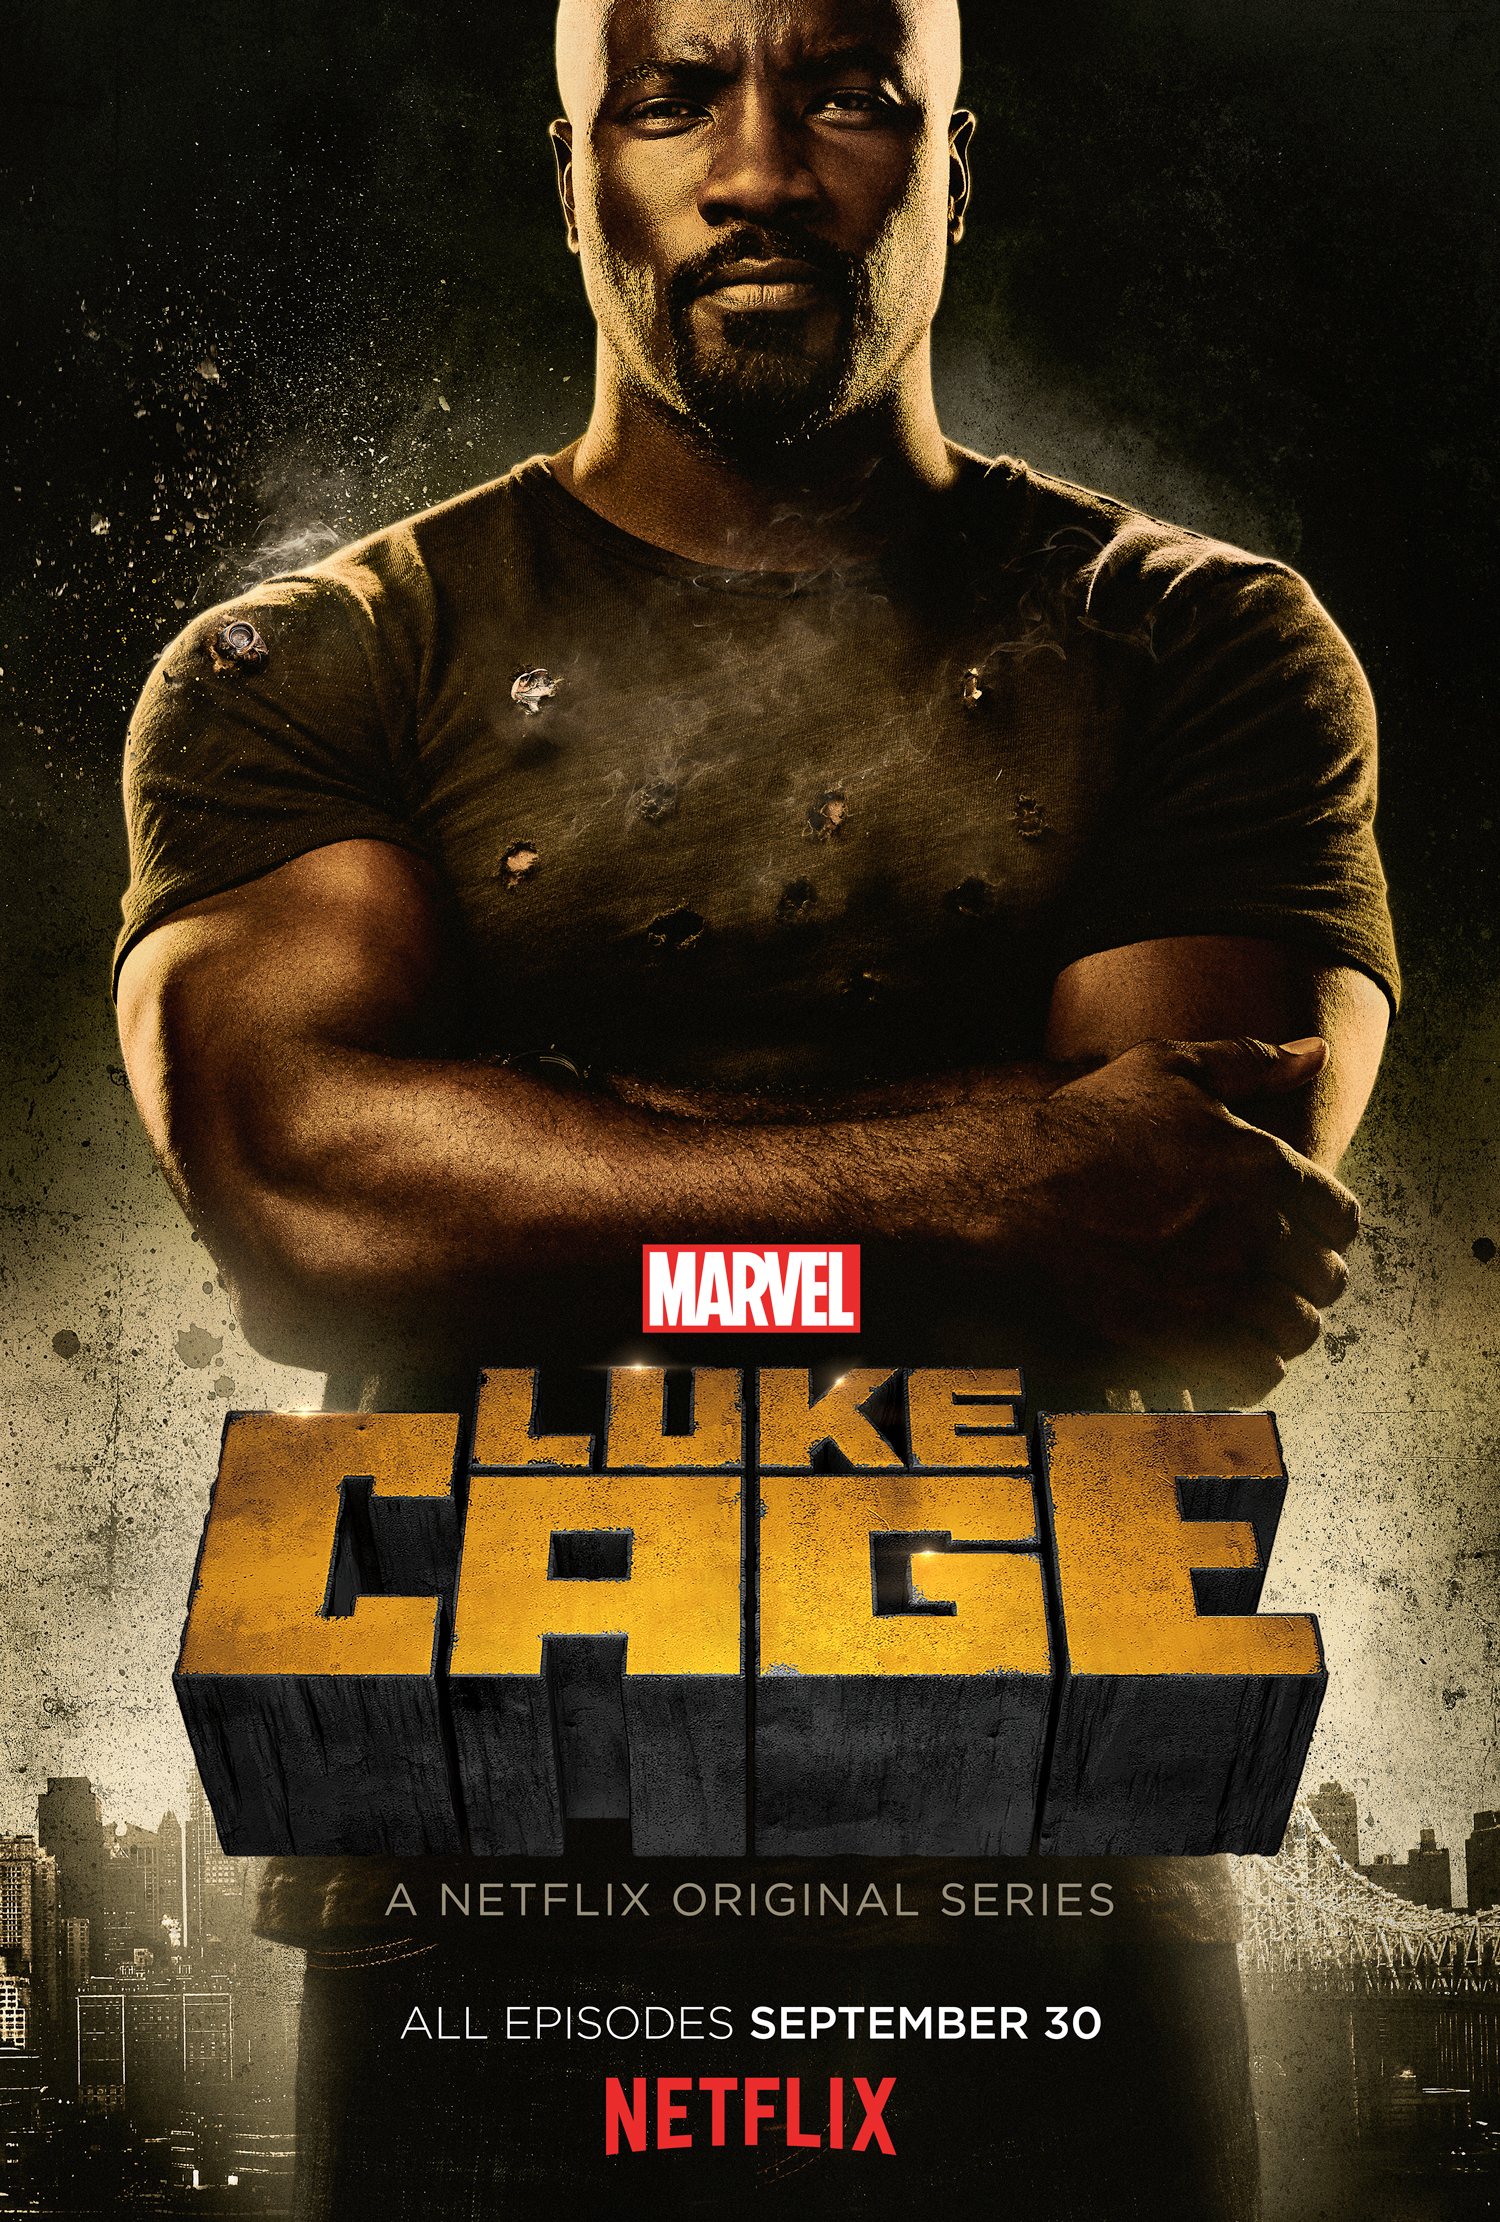 Marvel's Luke Cage on Netflix